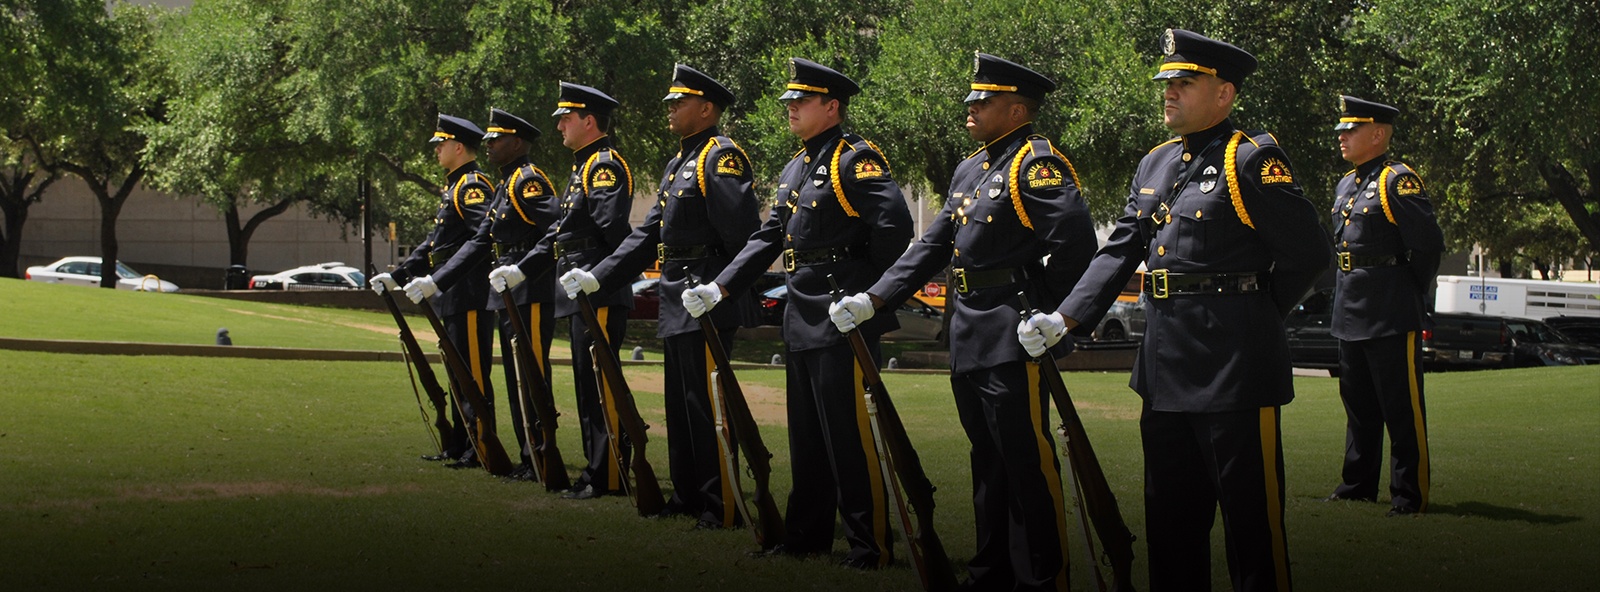 Blog by Texas Fallen Officer Foundation